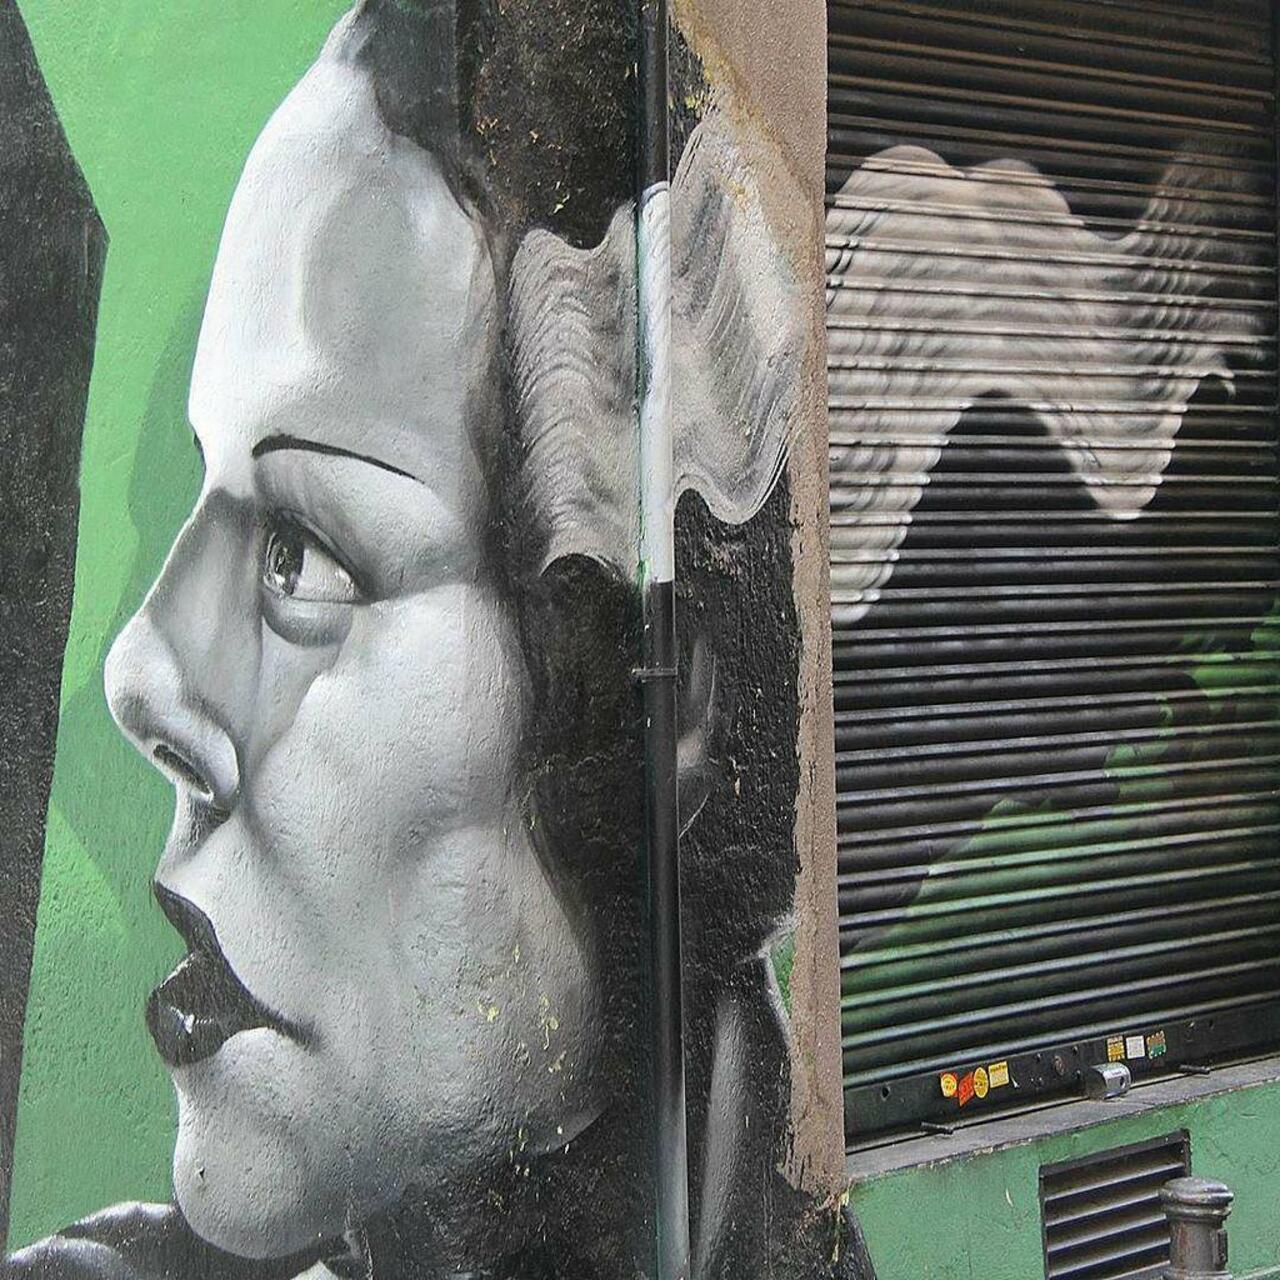 RT @StArtEverywhere: #madrid #madriz #madri #streetart #graffiti #grafite #arteurbano #artederua #artderue #artecallejero #lavapies #lav… http://t.co/NZ2aCmBO0v